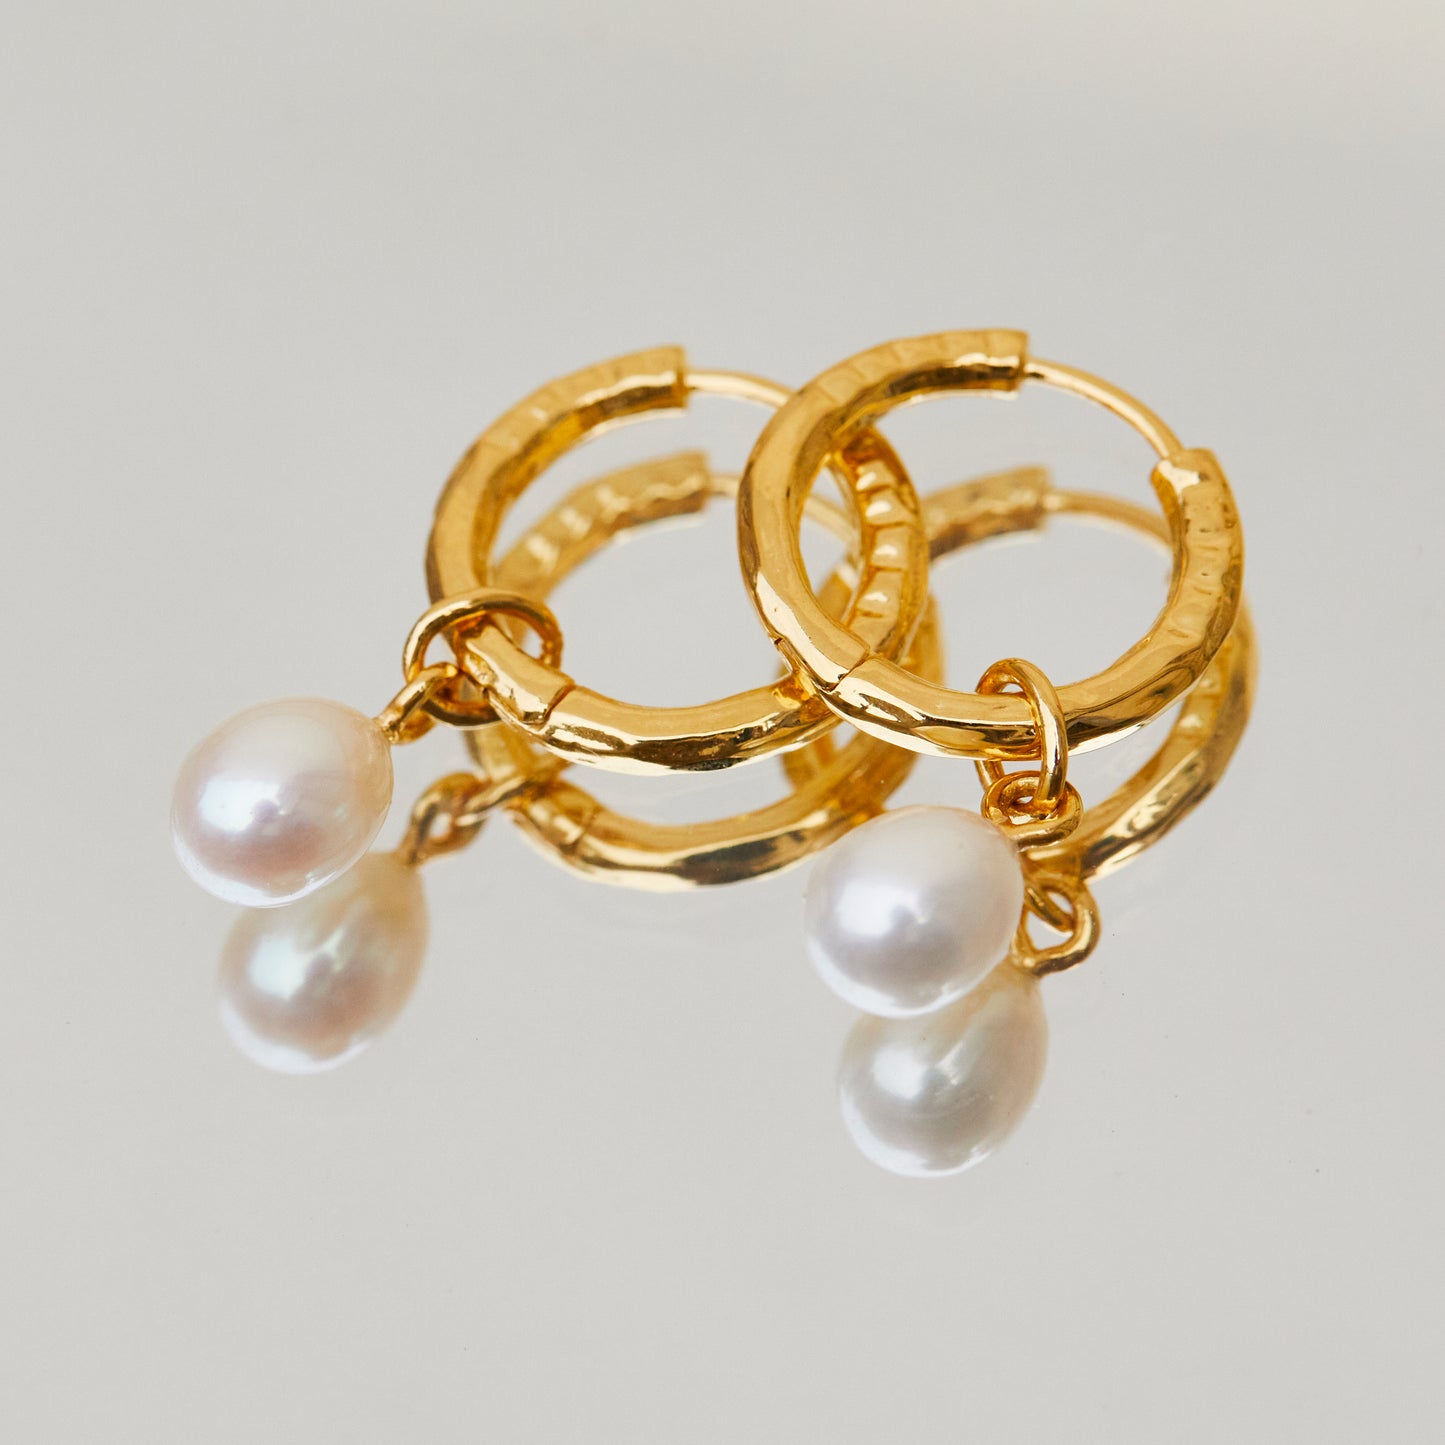 Pearl Drop Earrings in Gold Vermeil - Earrings - Carrie Elizabeth